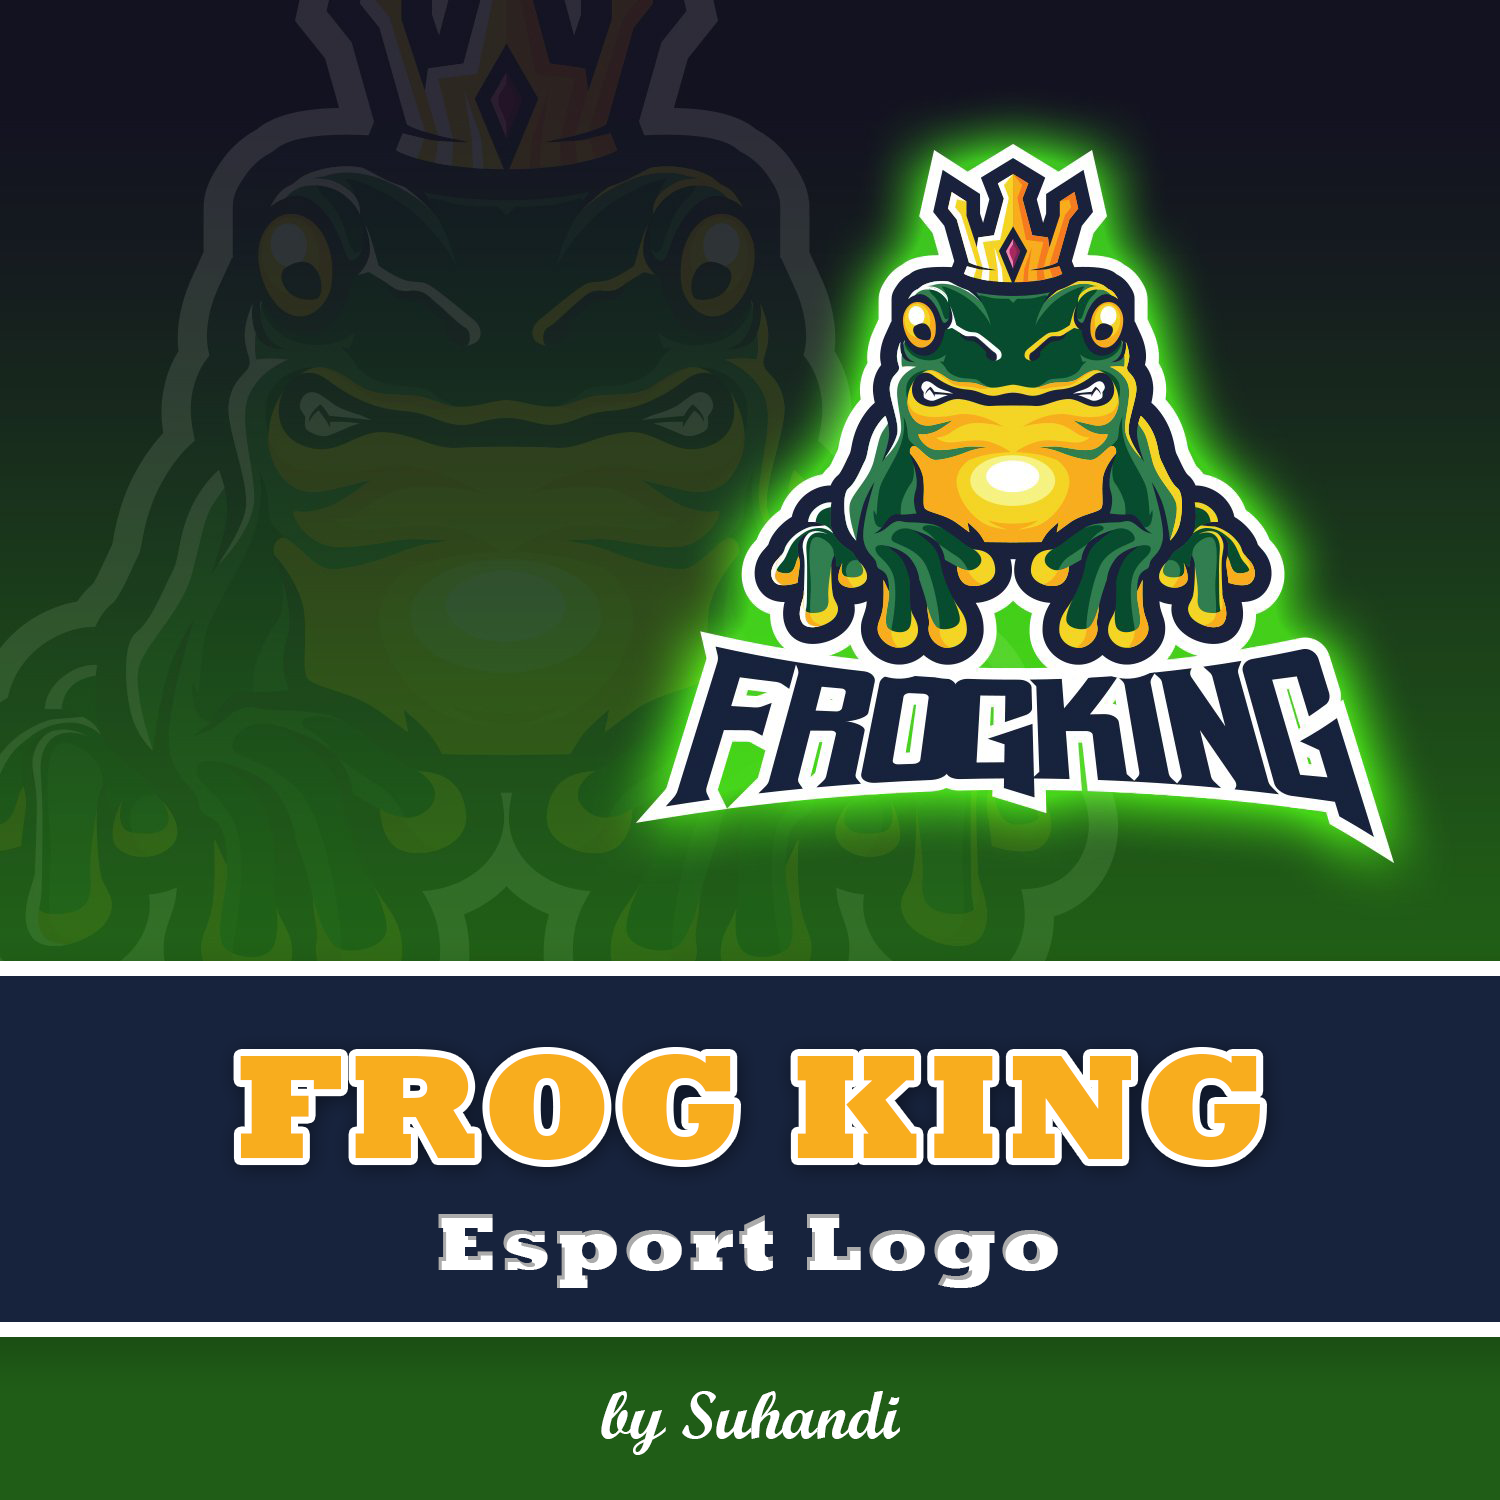 Frog King Esport Logo.